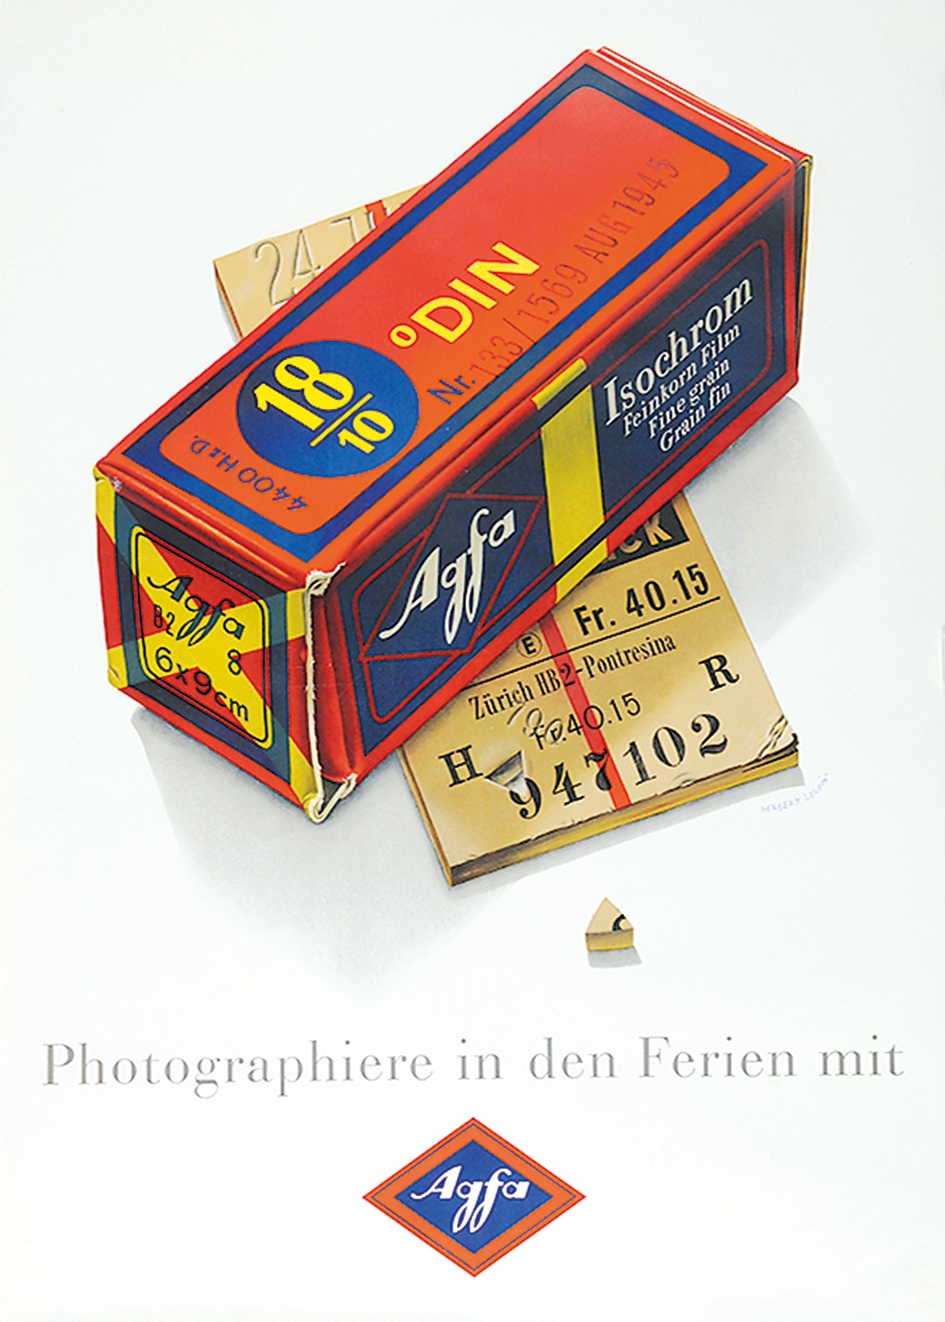 Photographiere in den Ferien mit Agfa by Herbert Leupin, 1944